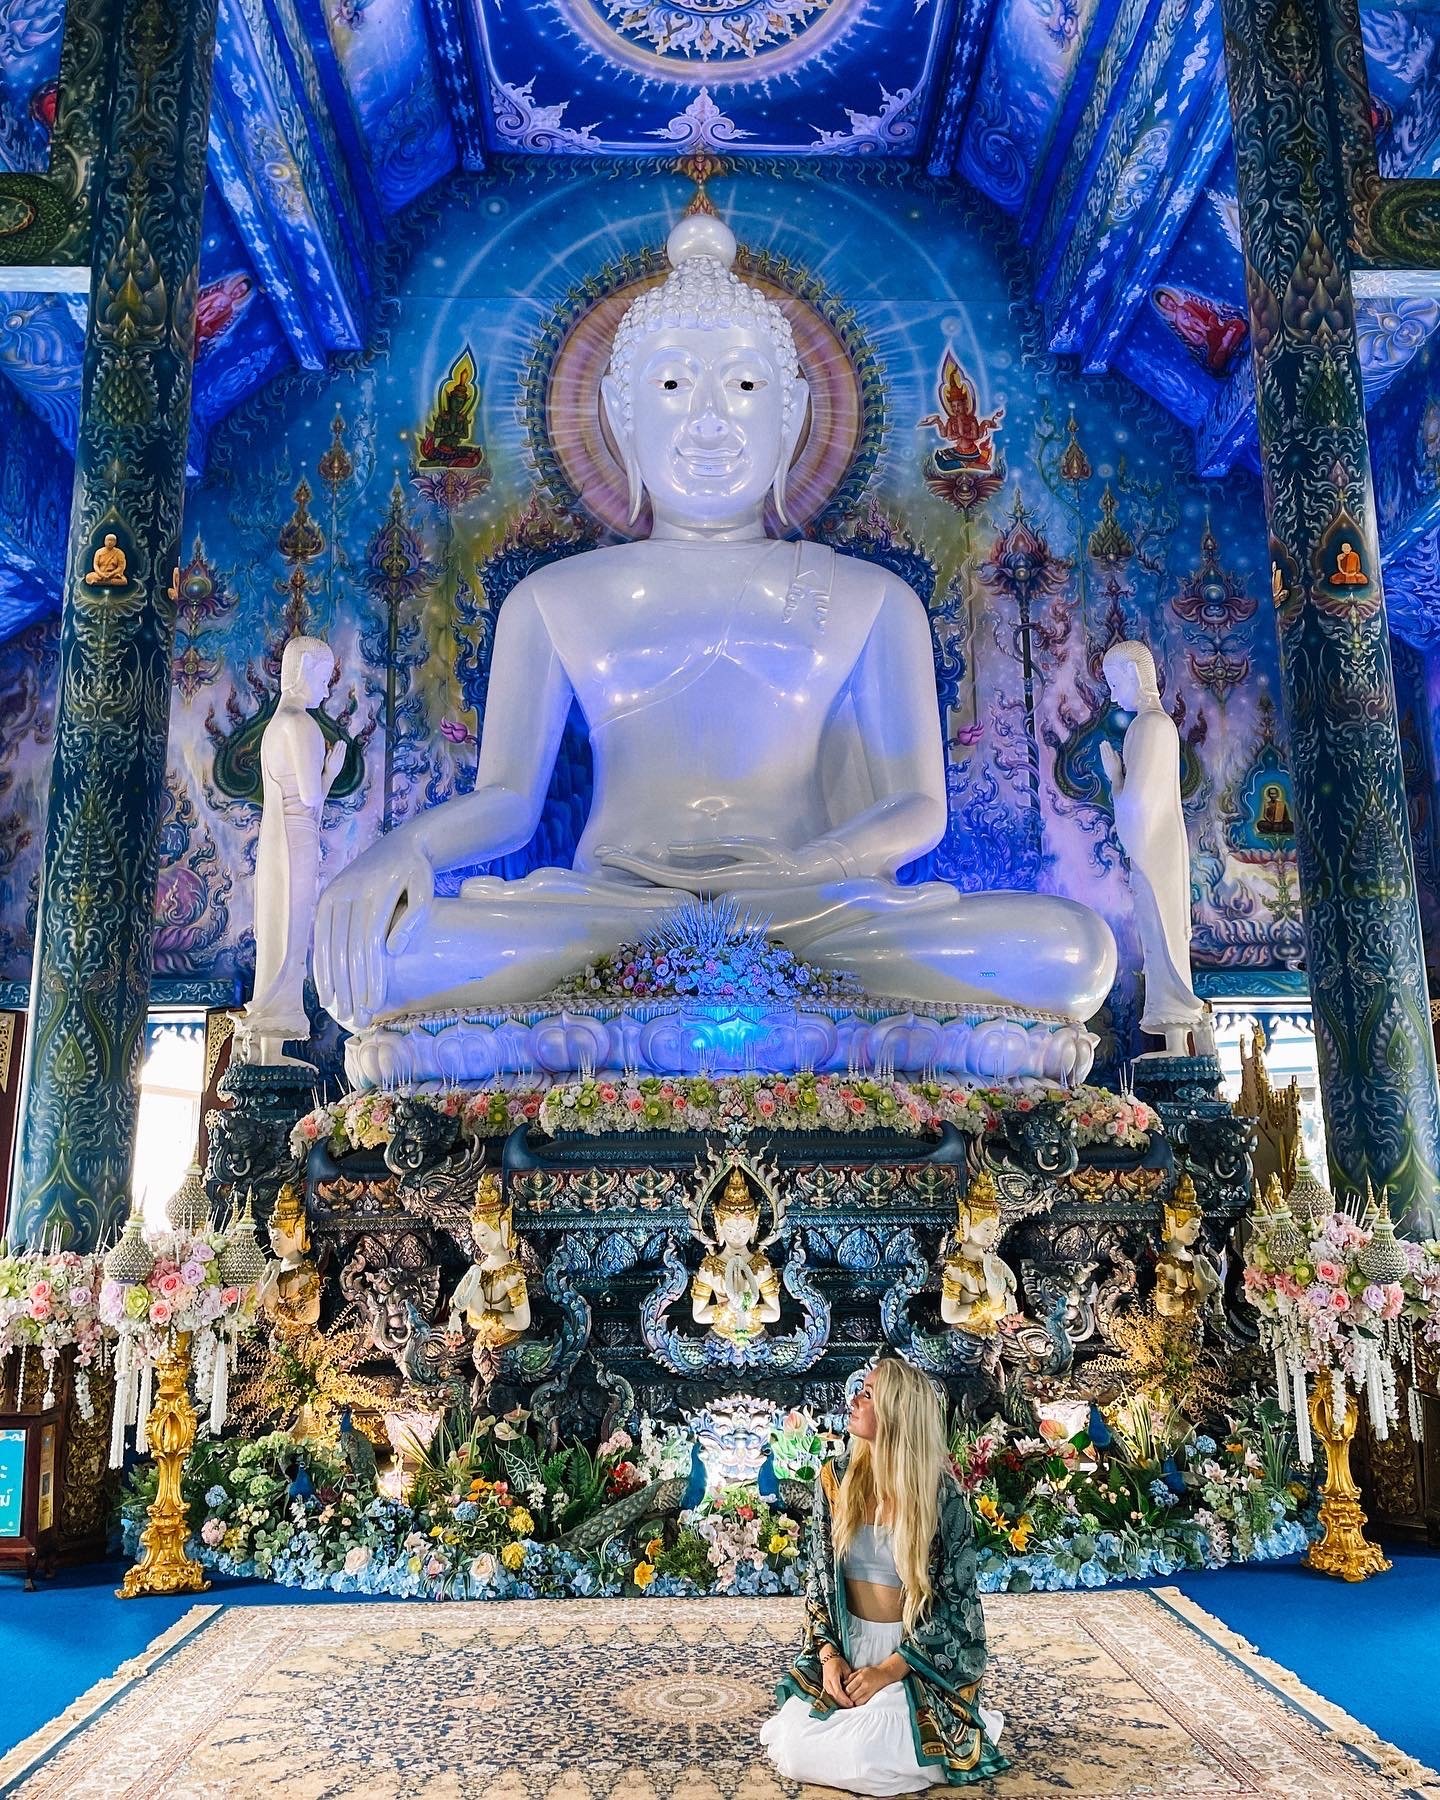 How to get from Chiang Rai to Luang Prabang: Nagi of Mekong review